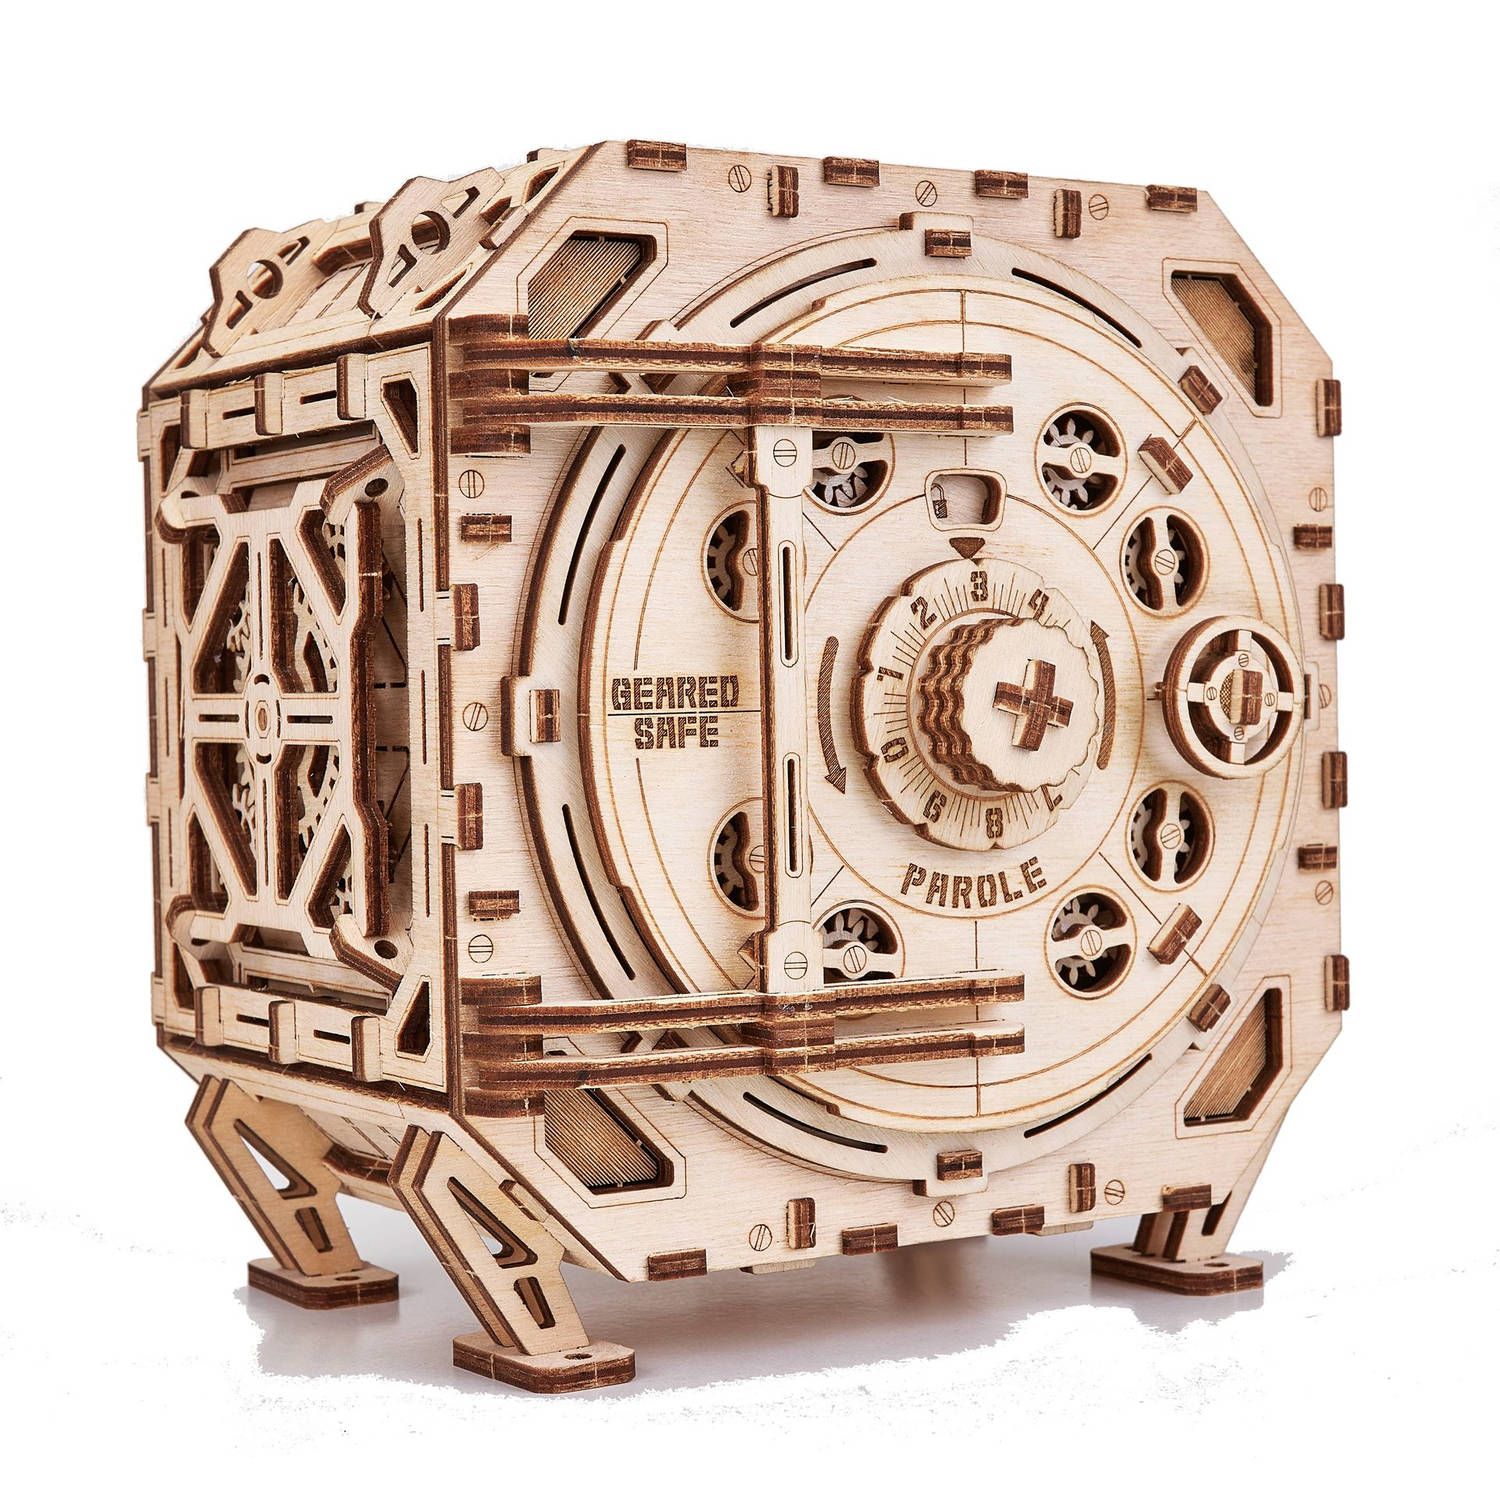 WoodTrick – Modelbouw 3D houten puzzel – ‘Geared safe’ (WDTK037) – 259 stuks - Geen lijm noch verf nodig!